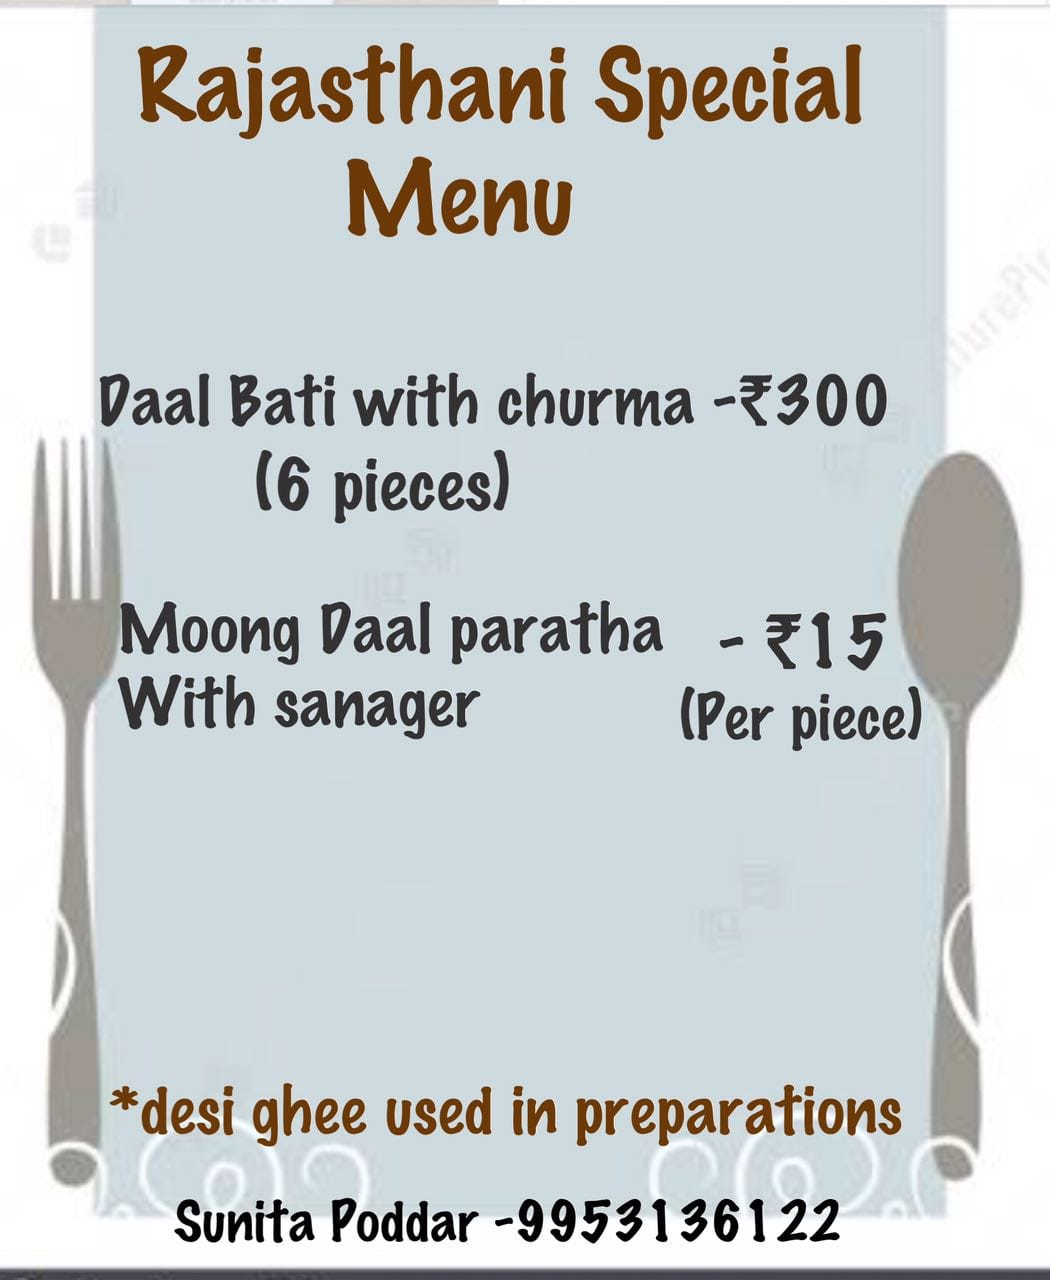 Rajasthani menu